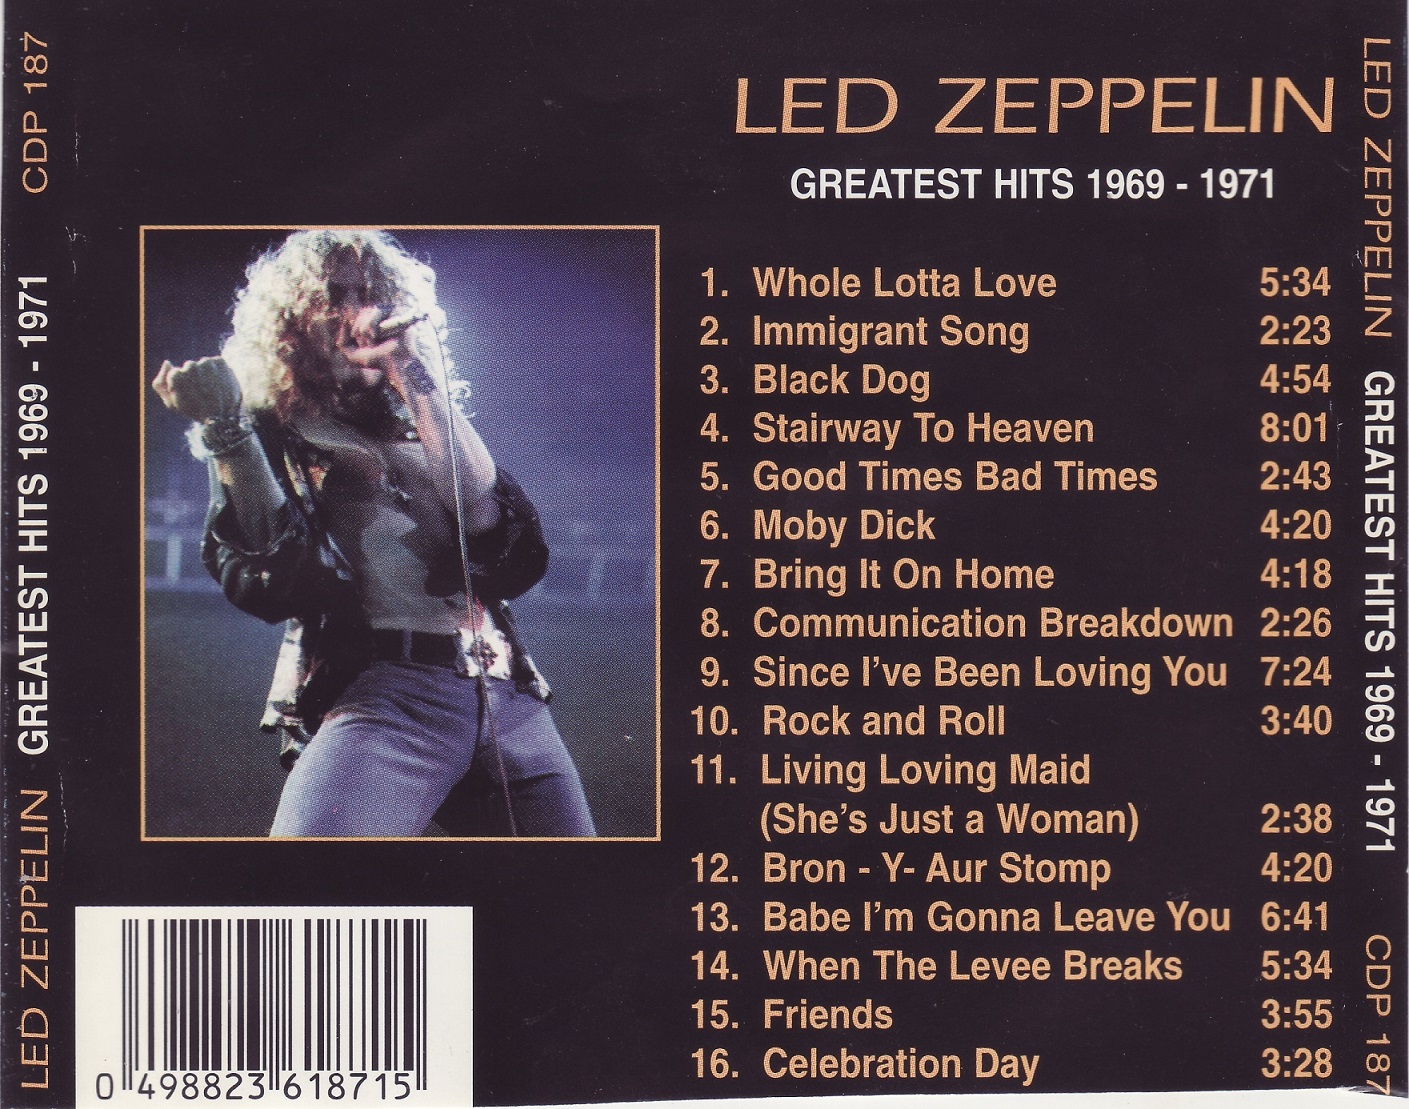 Led Zeppelin - Greatest Hits 1969-1971